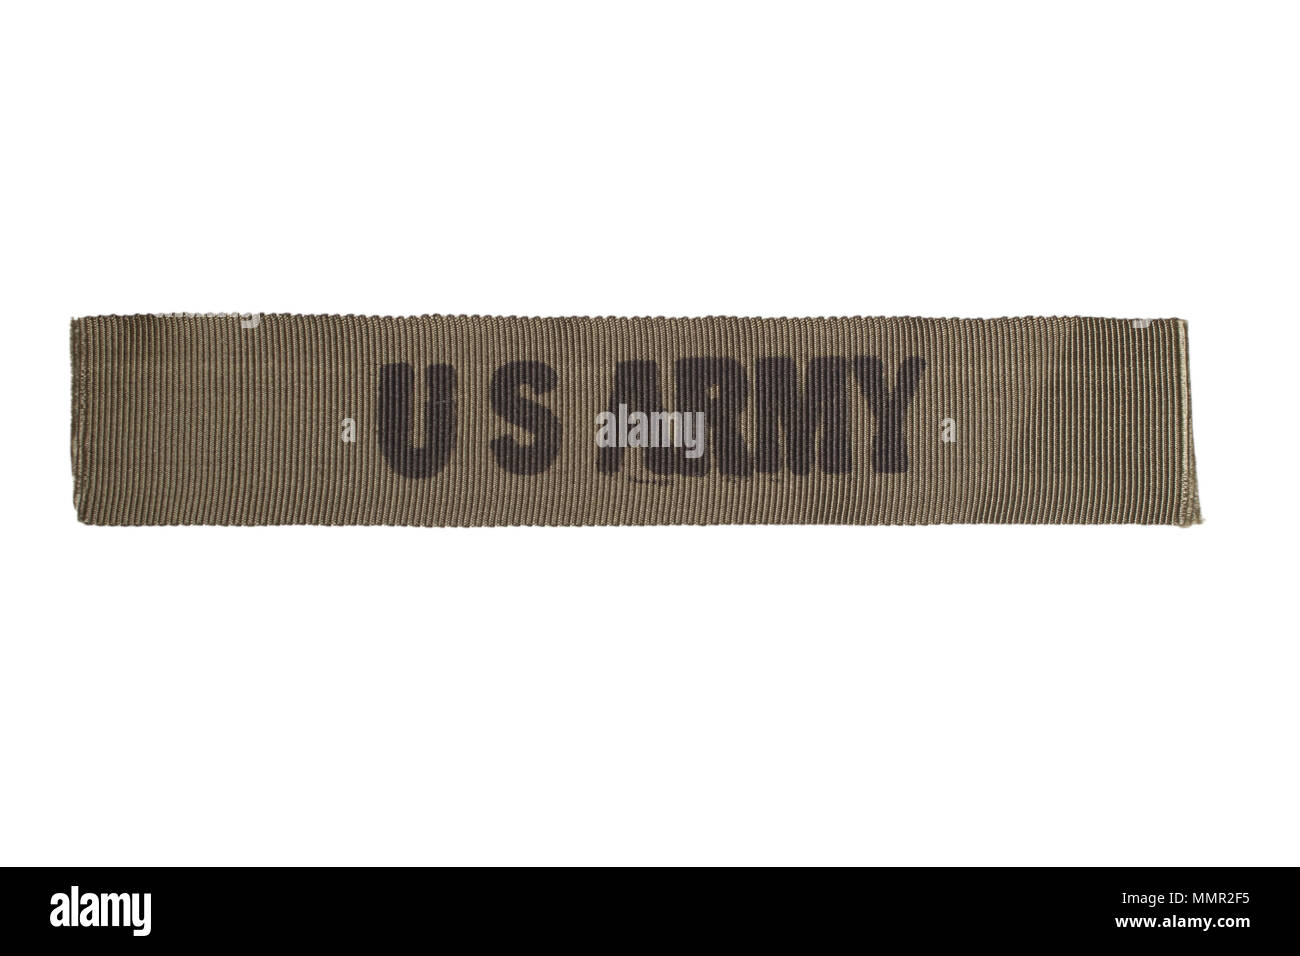 US ARMY uniform badge Stock Photo